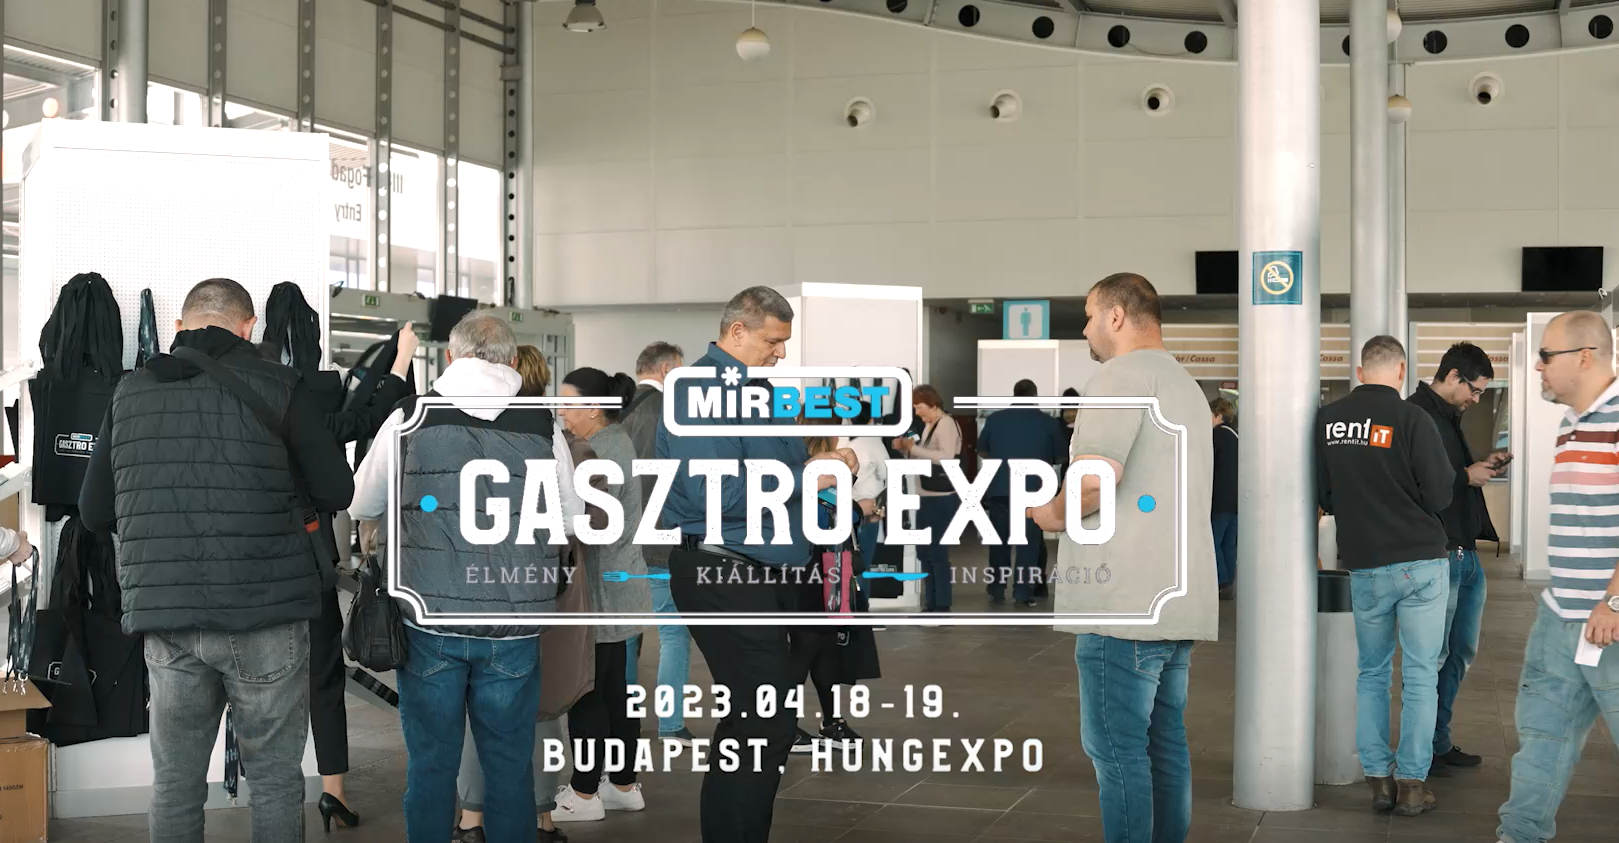 Mirbest Gasztro Expo 2023